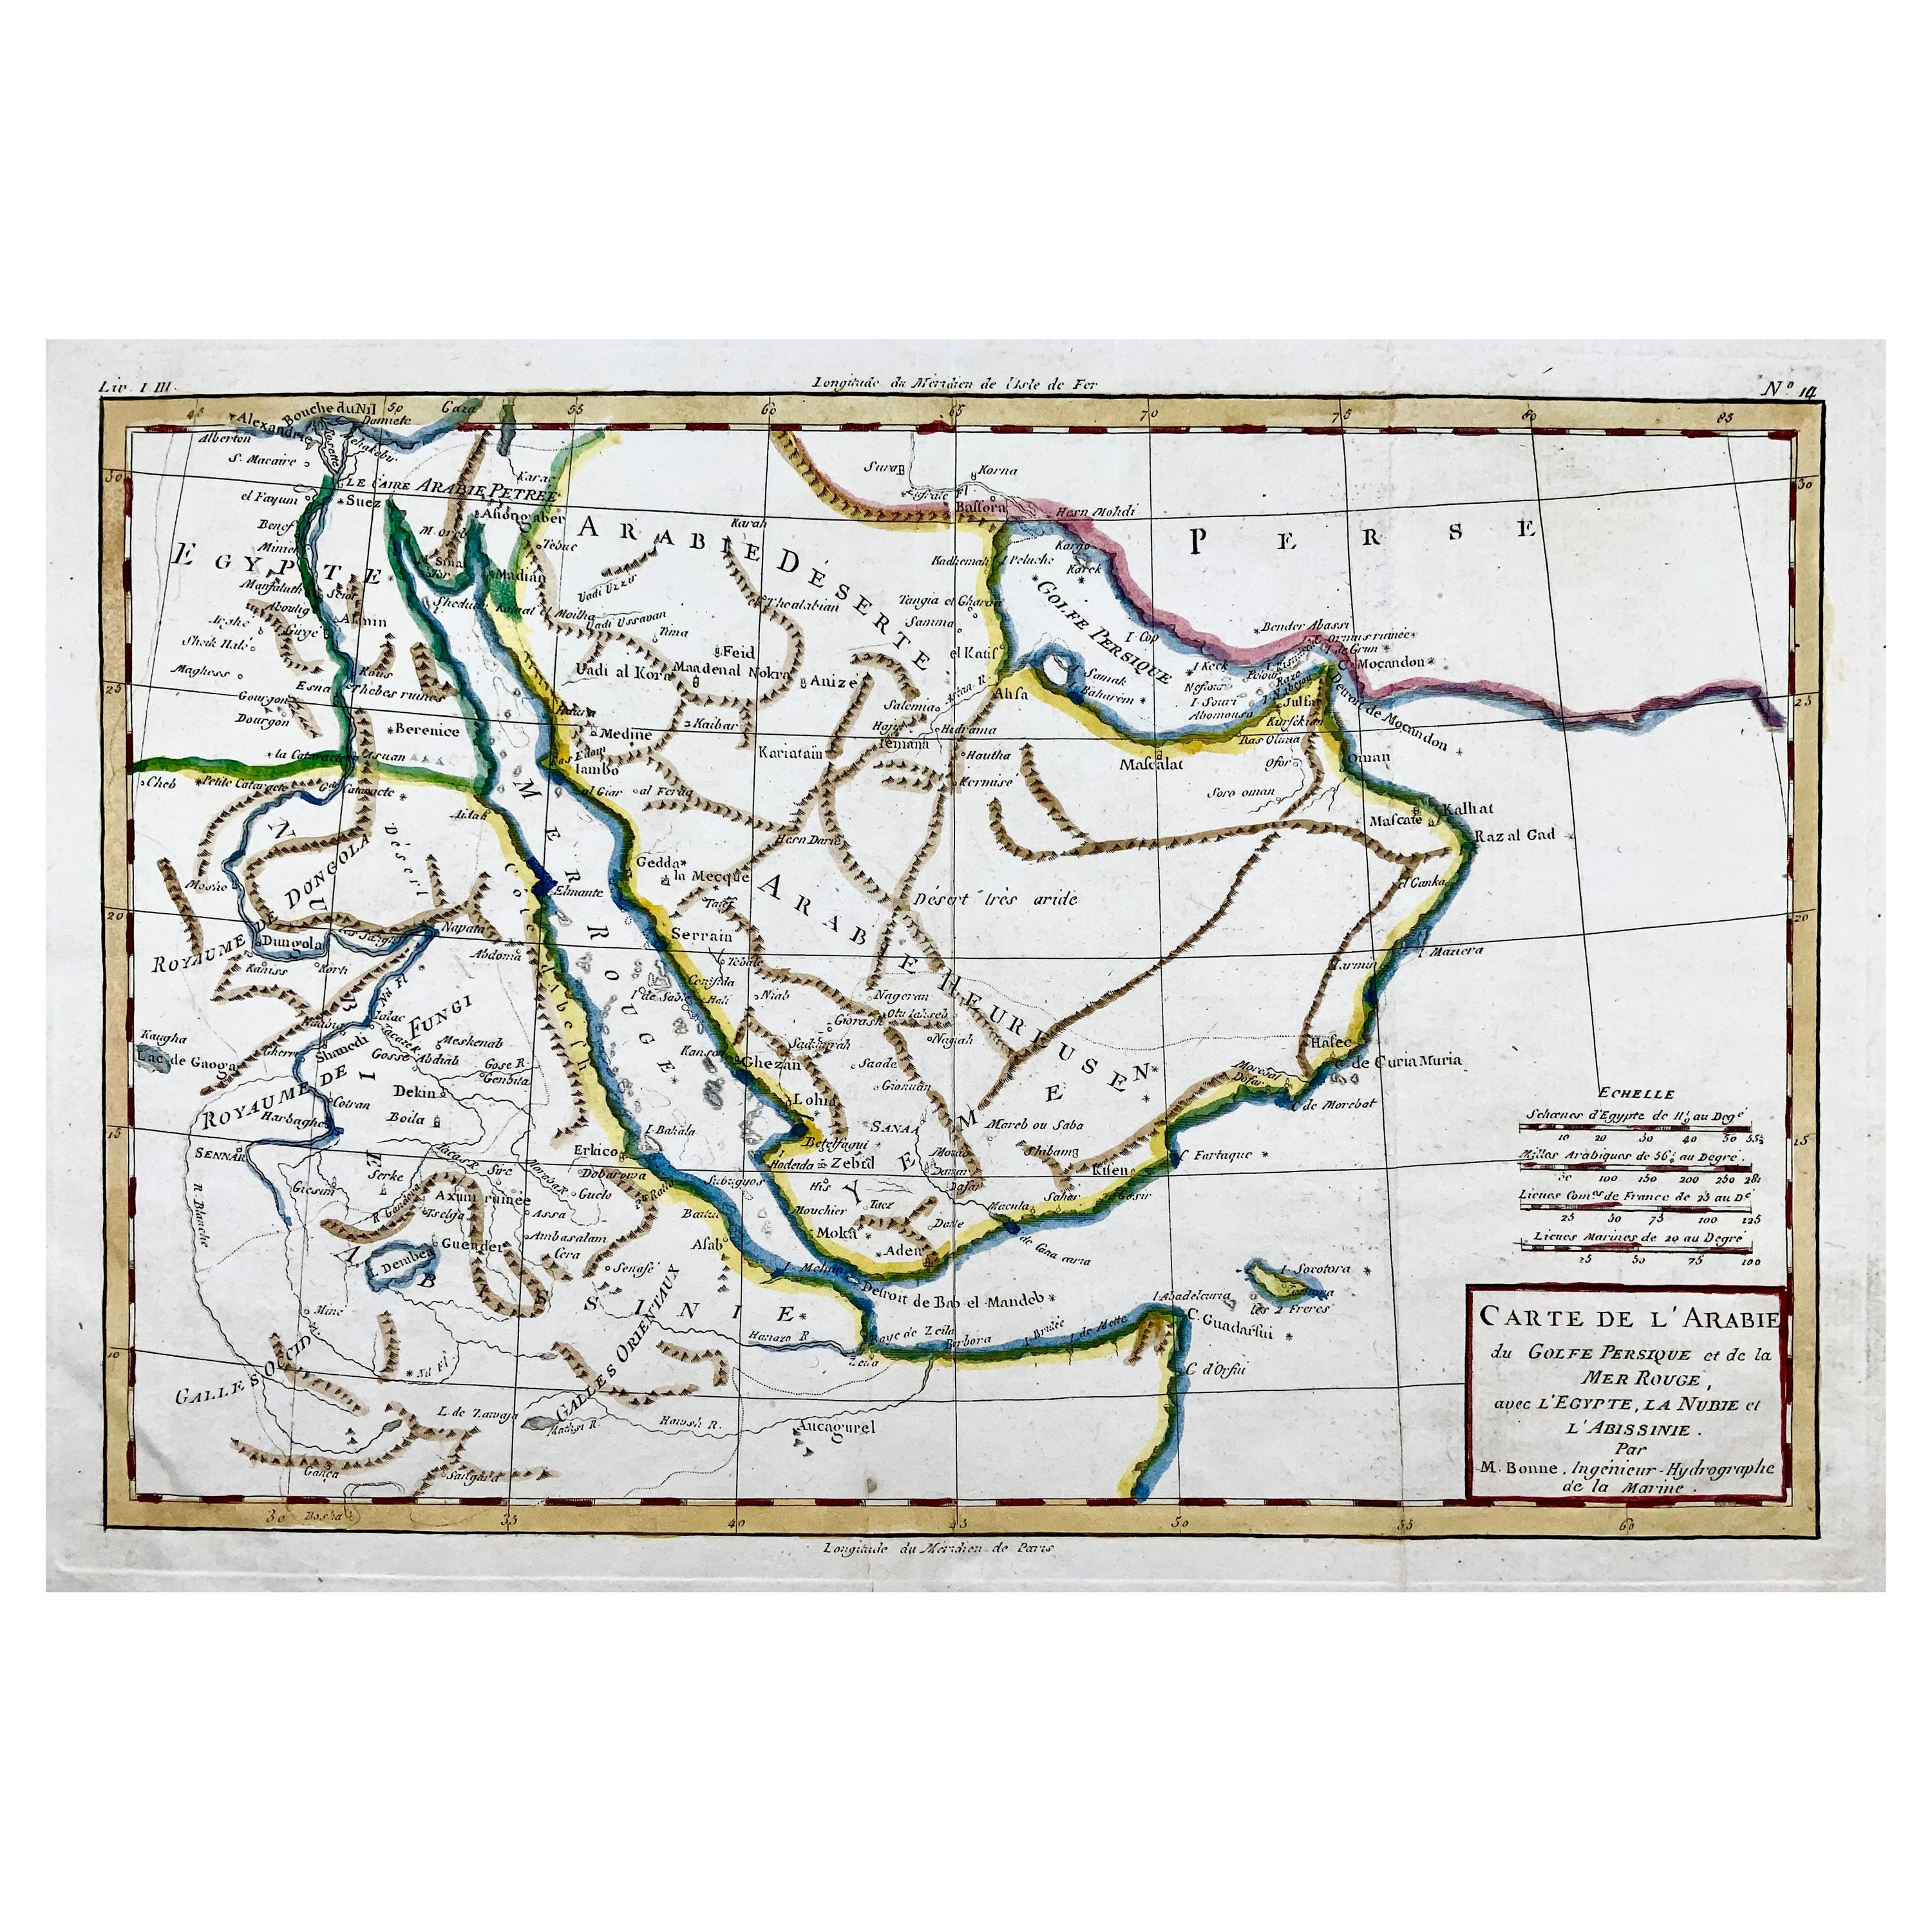 Bonne, Karte des Nahen Osten, Persien, Rotes Meer, Ägypten, Nubia, handkoloriert